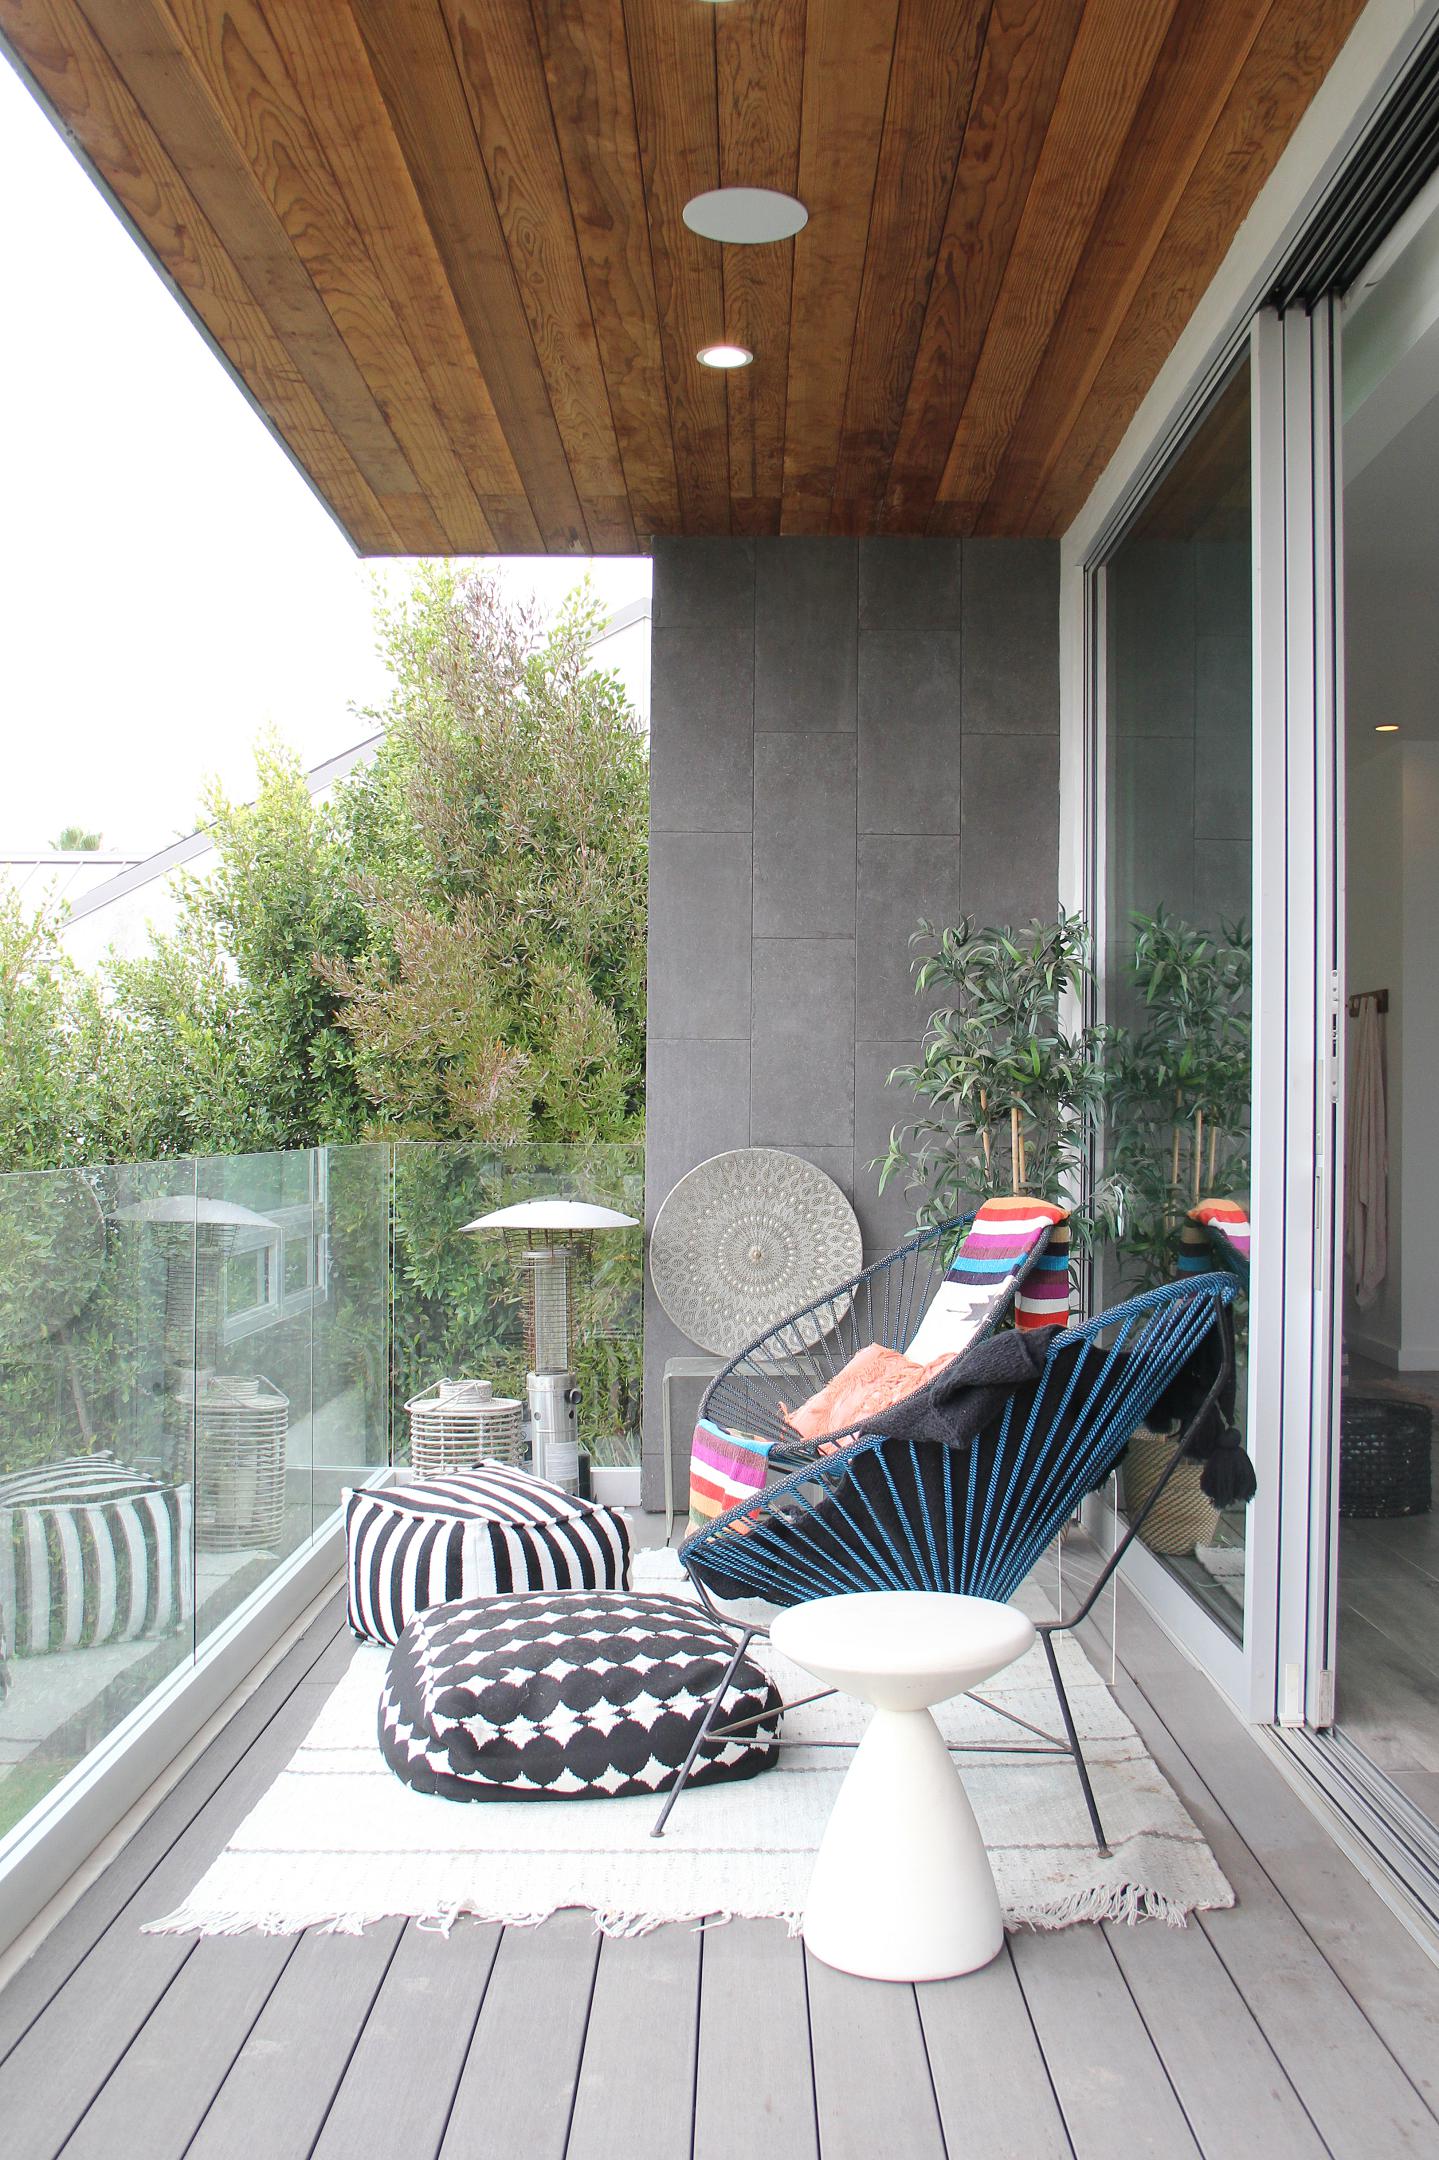 Modern patio with stylish furniture and greenery.